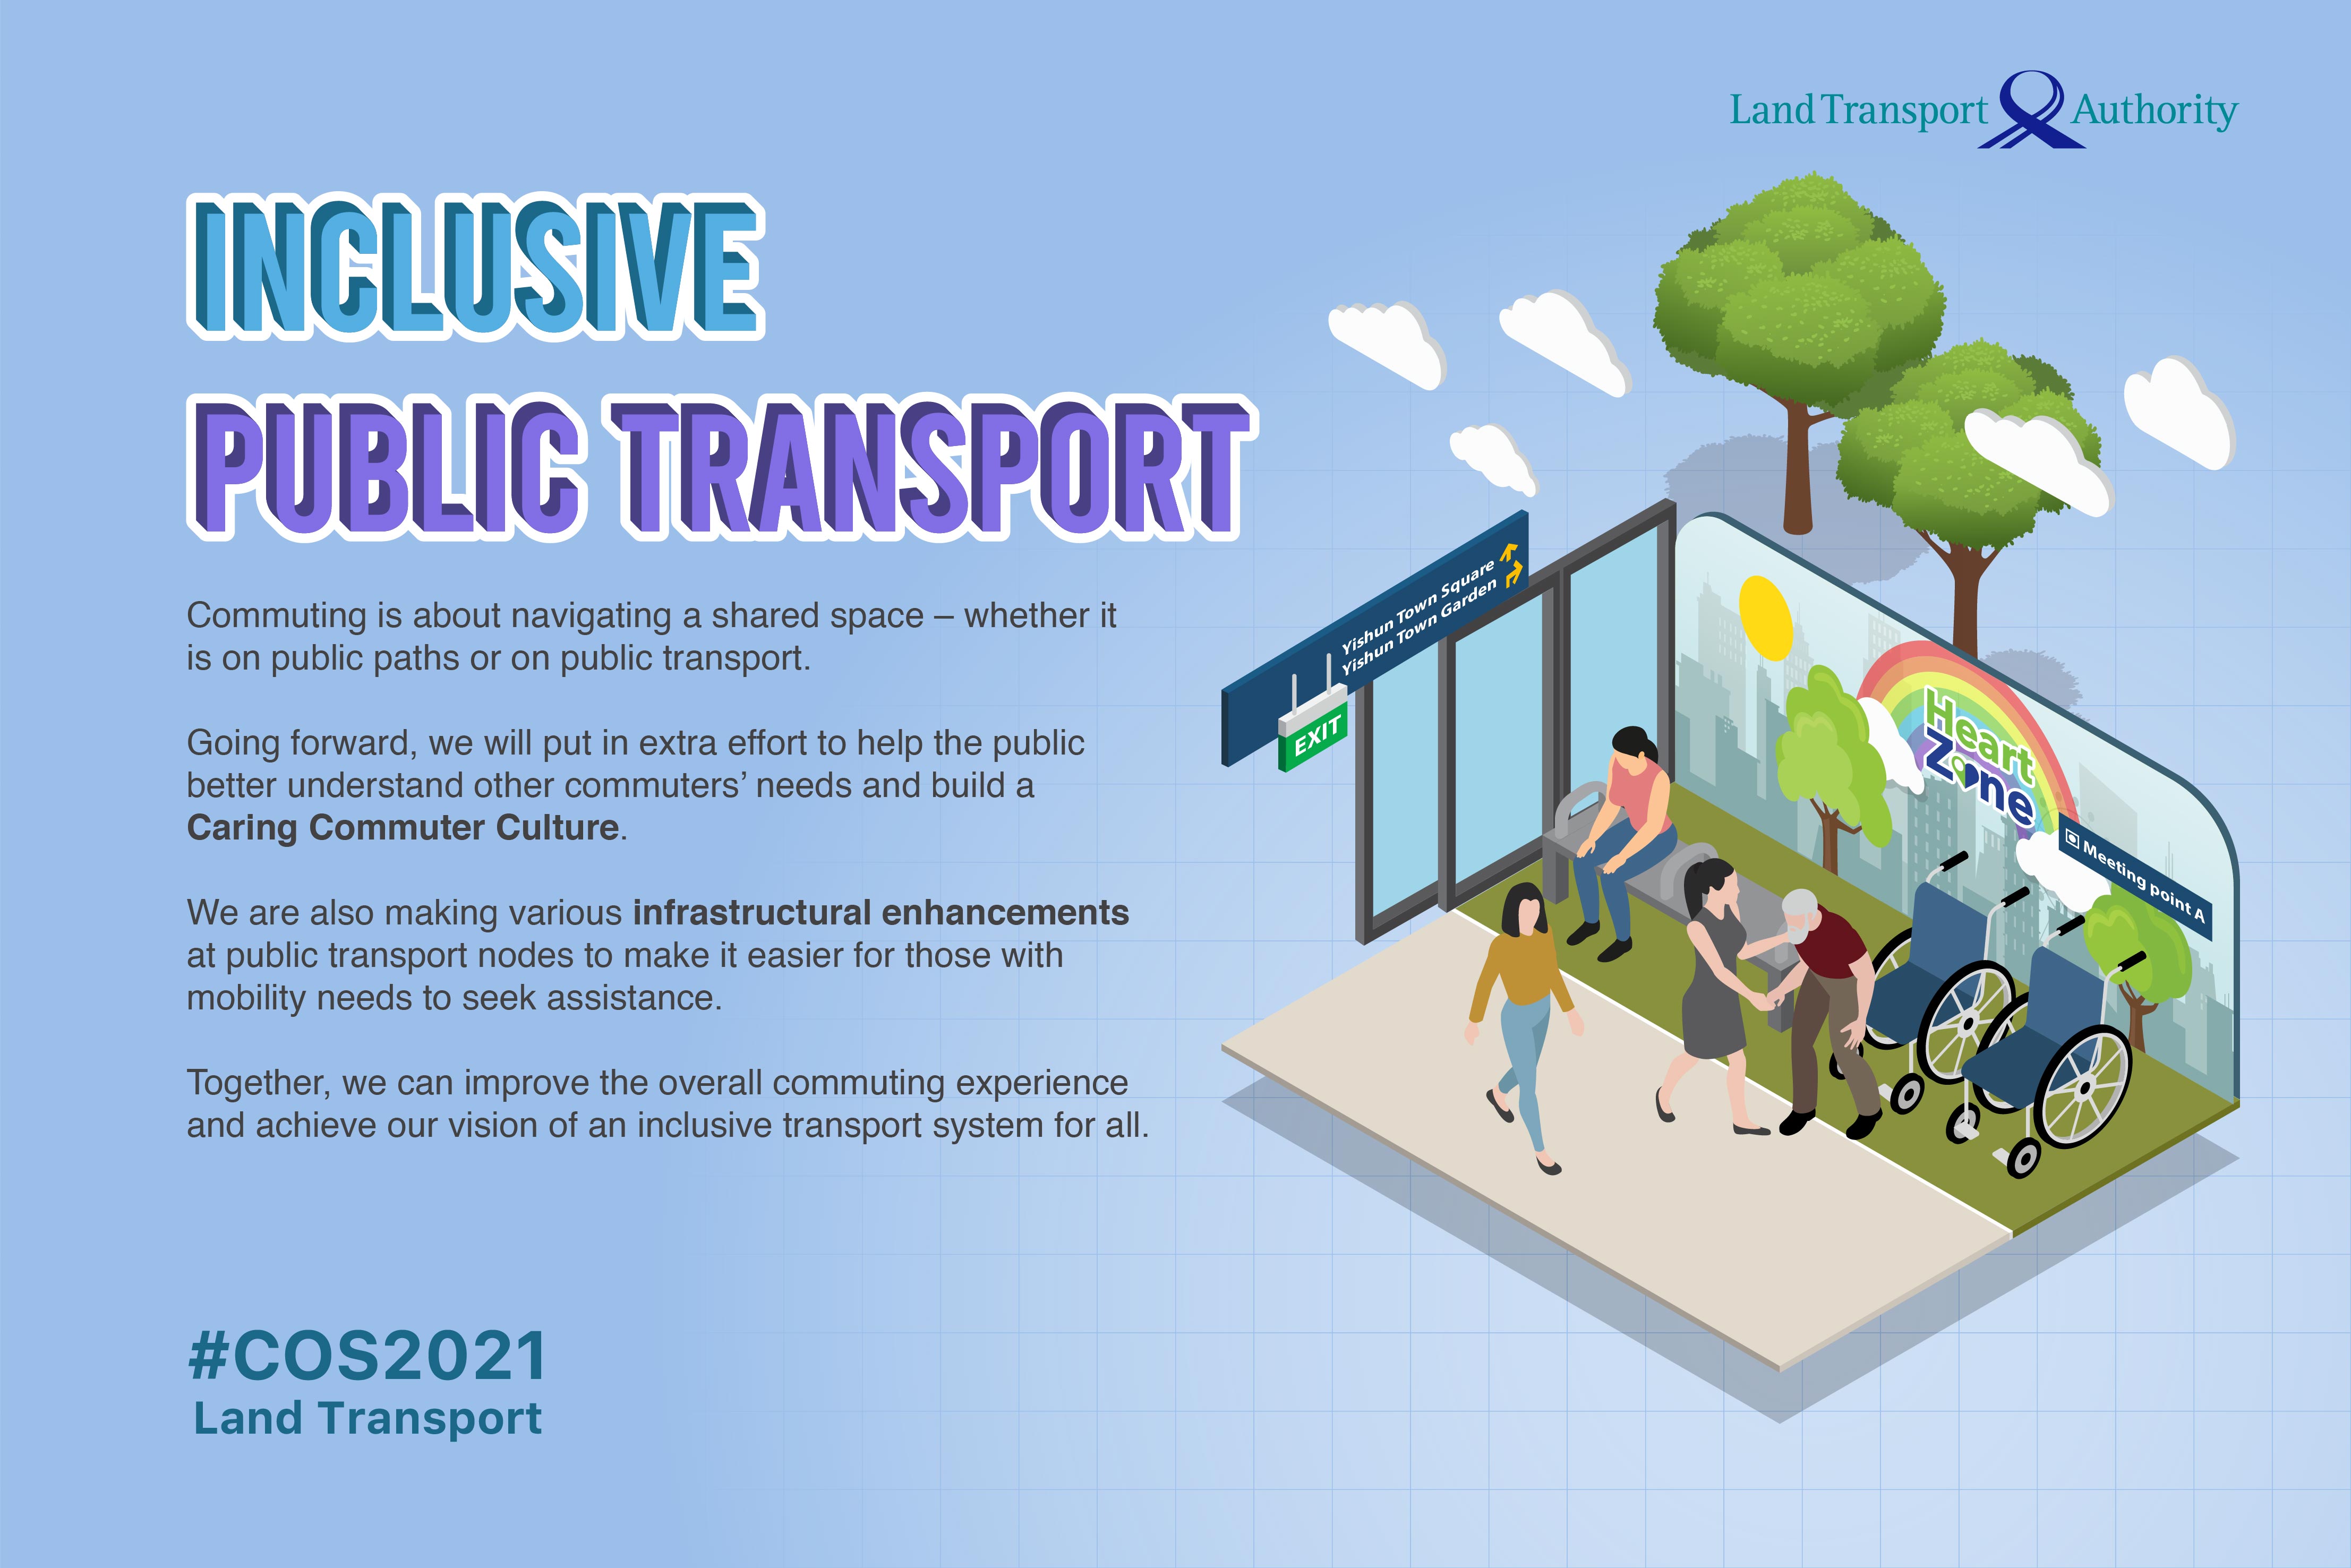 Latest Happenings - COS 2021 on Inclusive Public Transport